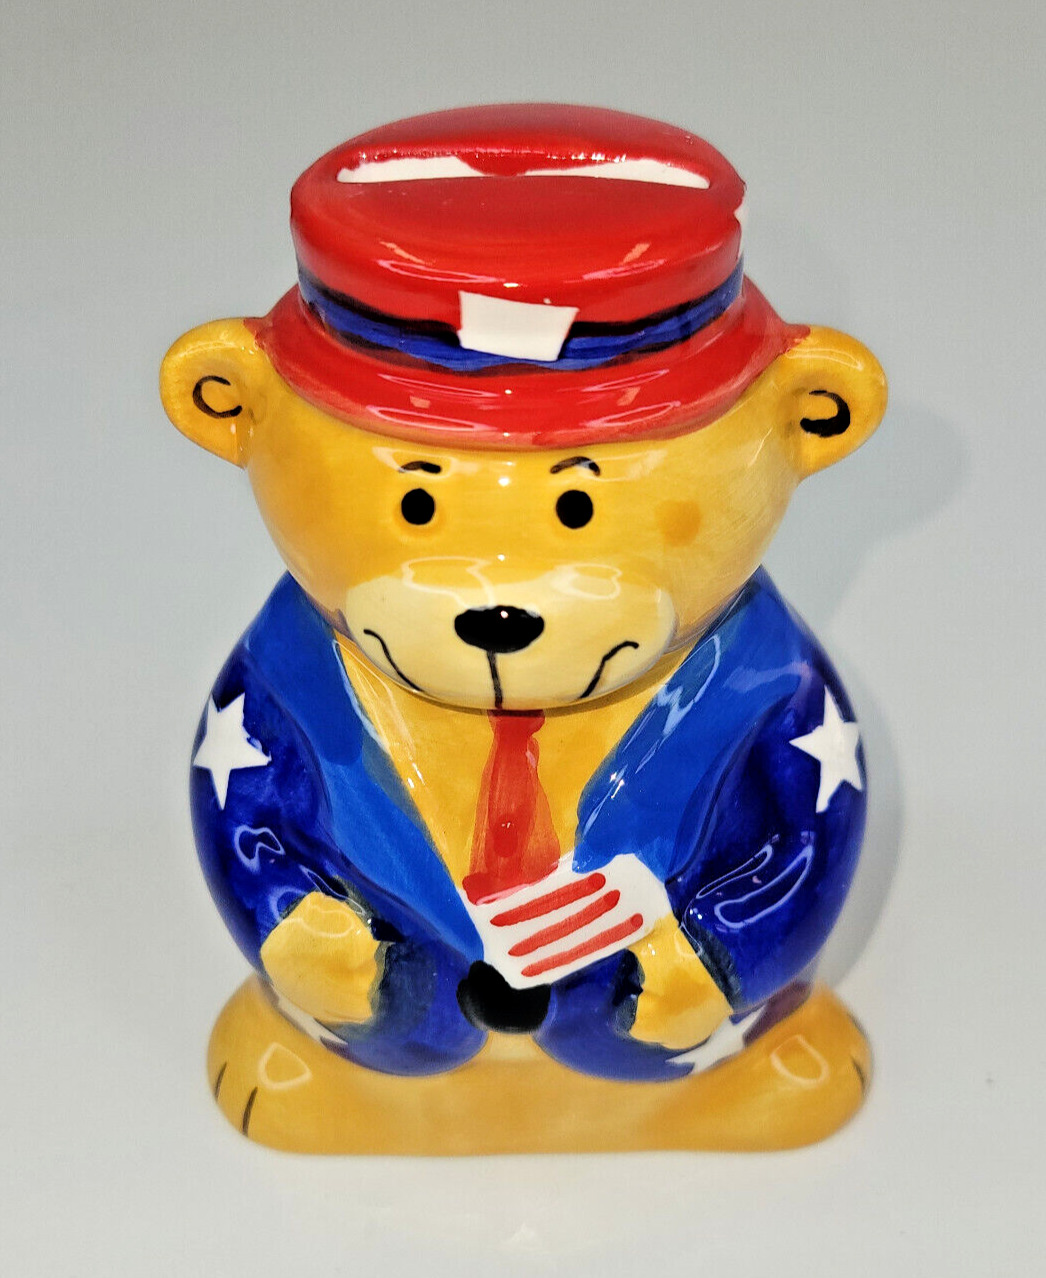 Patriotic Teddy Bear Ceramic Bank 4th of July USA Tiered Tray Americana Decor